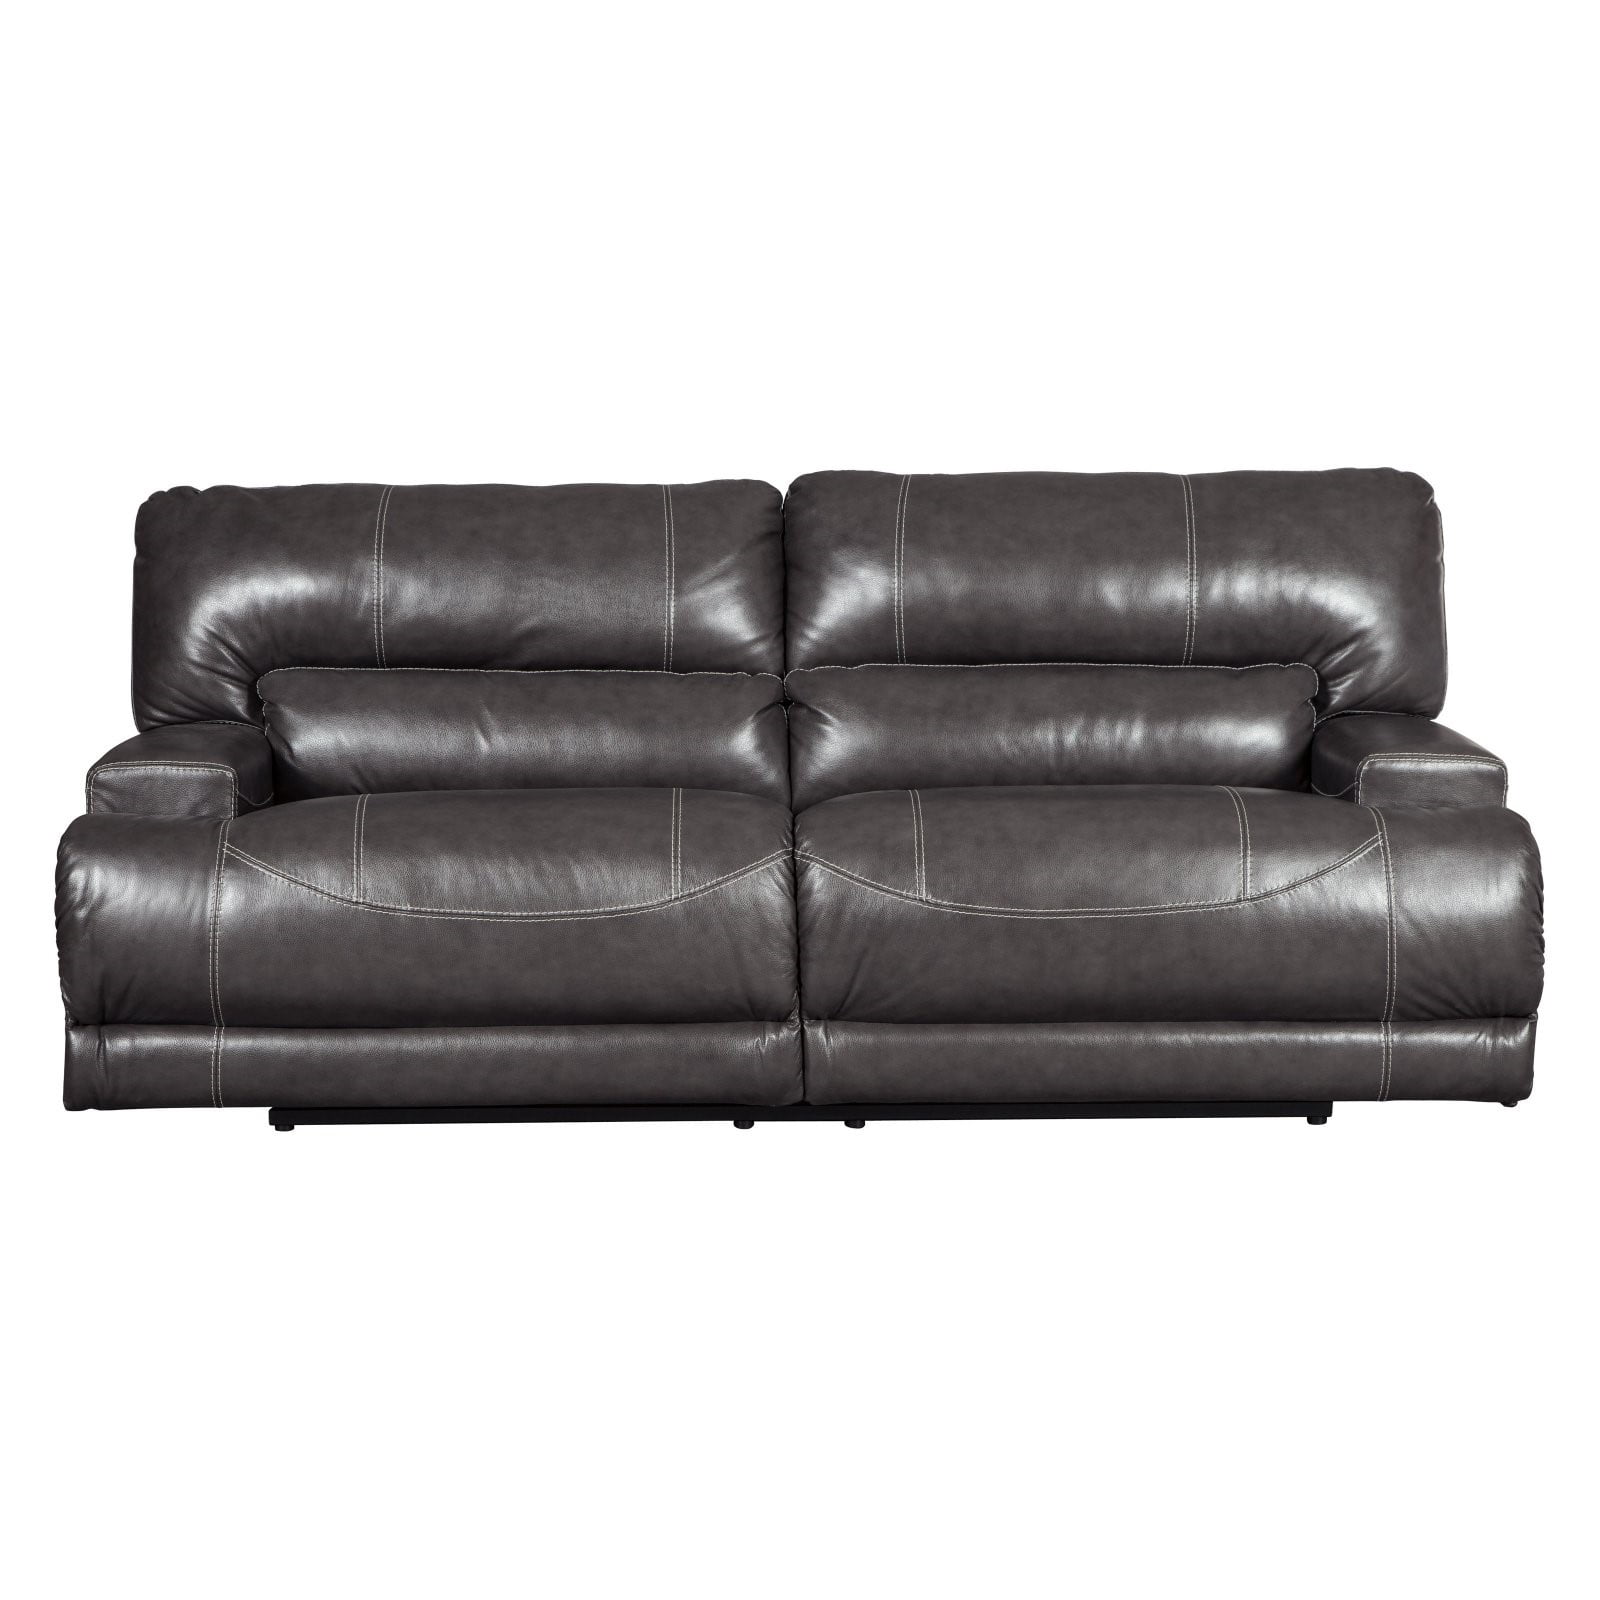 Ashley Furniture Mccaskill Leather Reclining Sofa In Gray